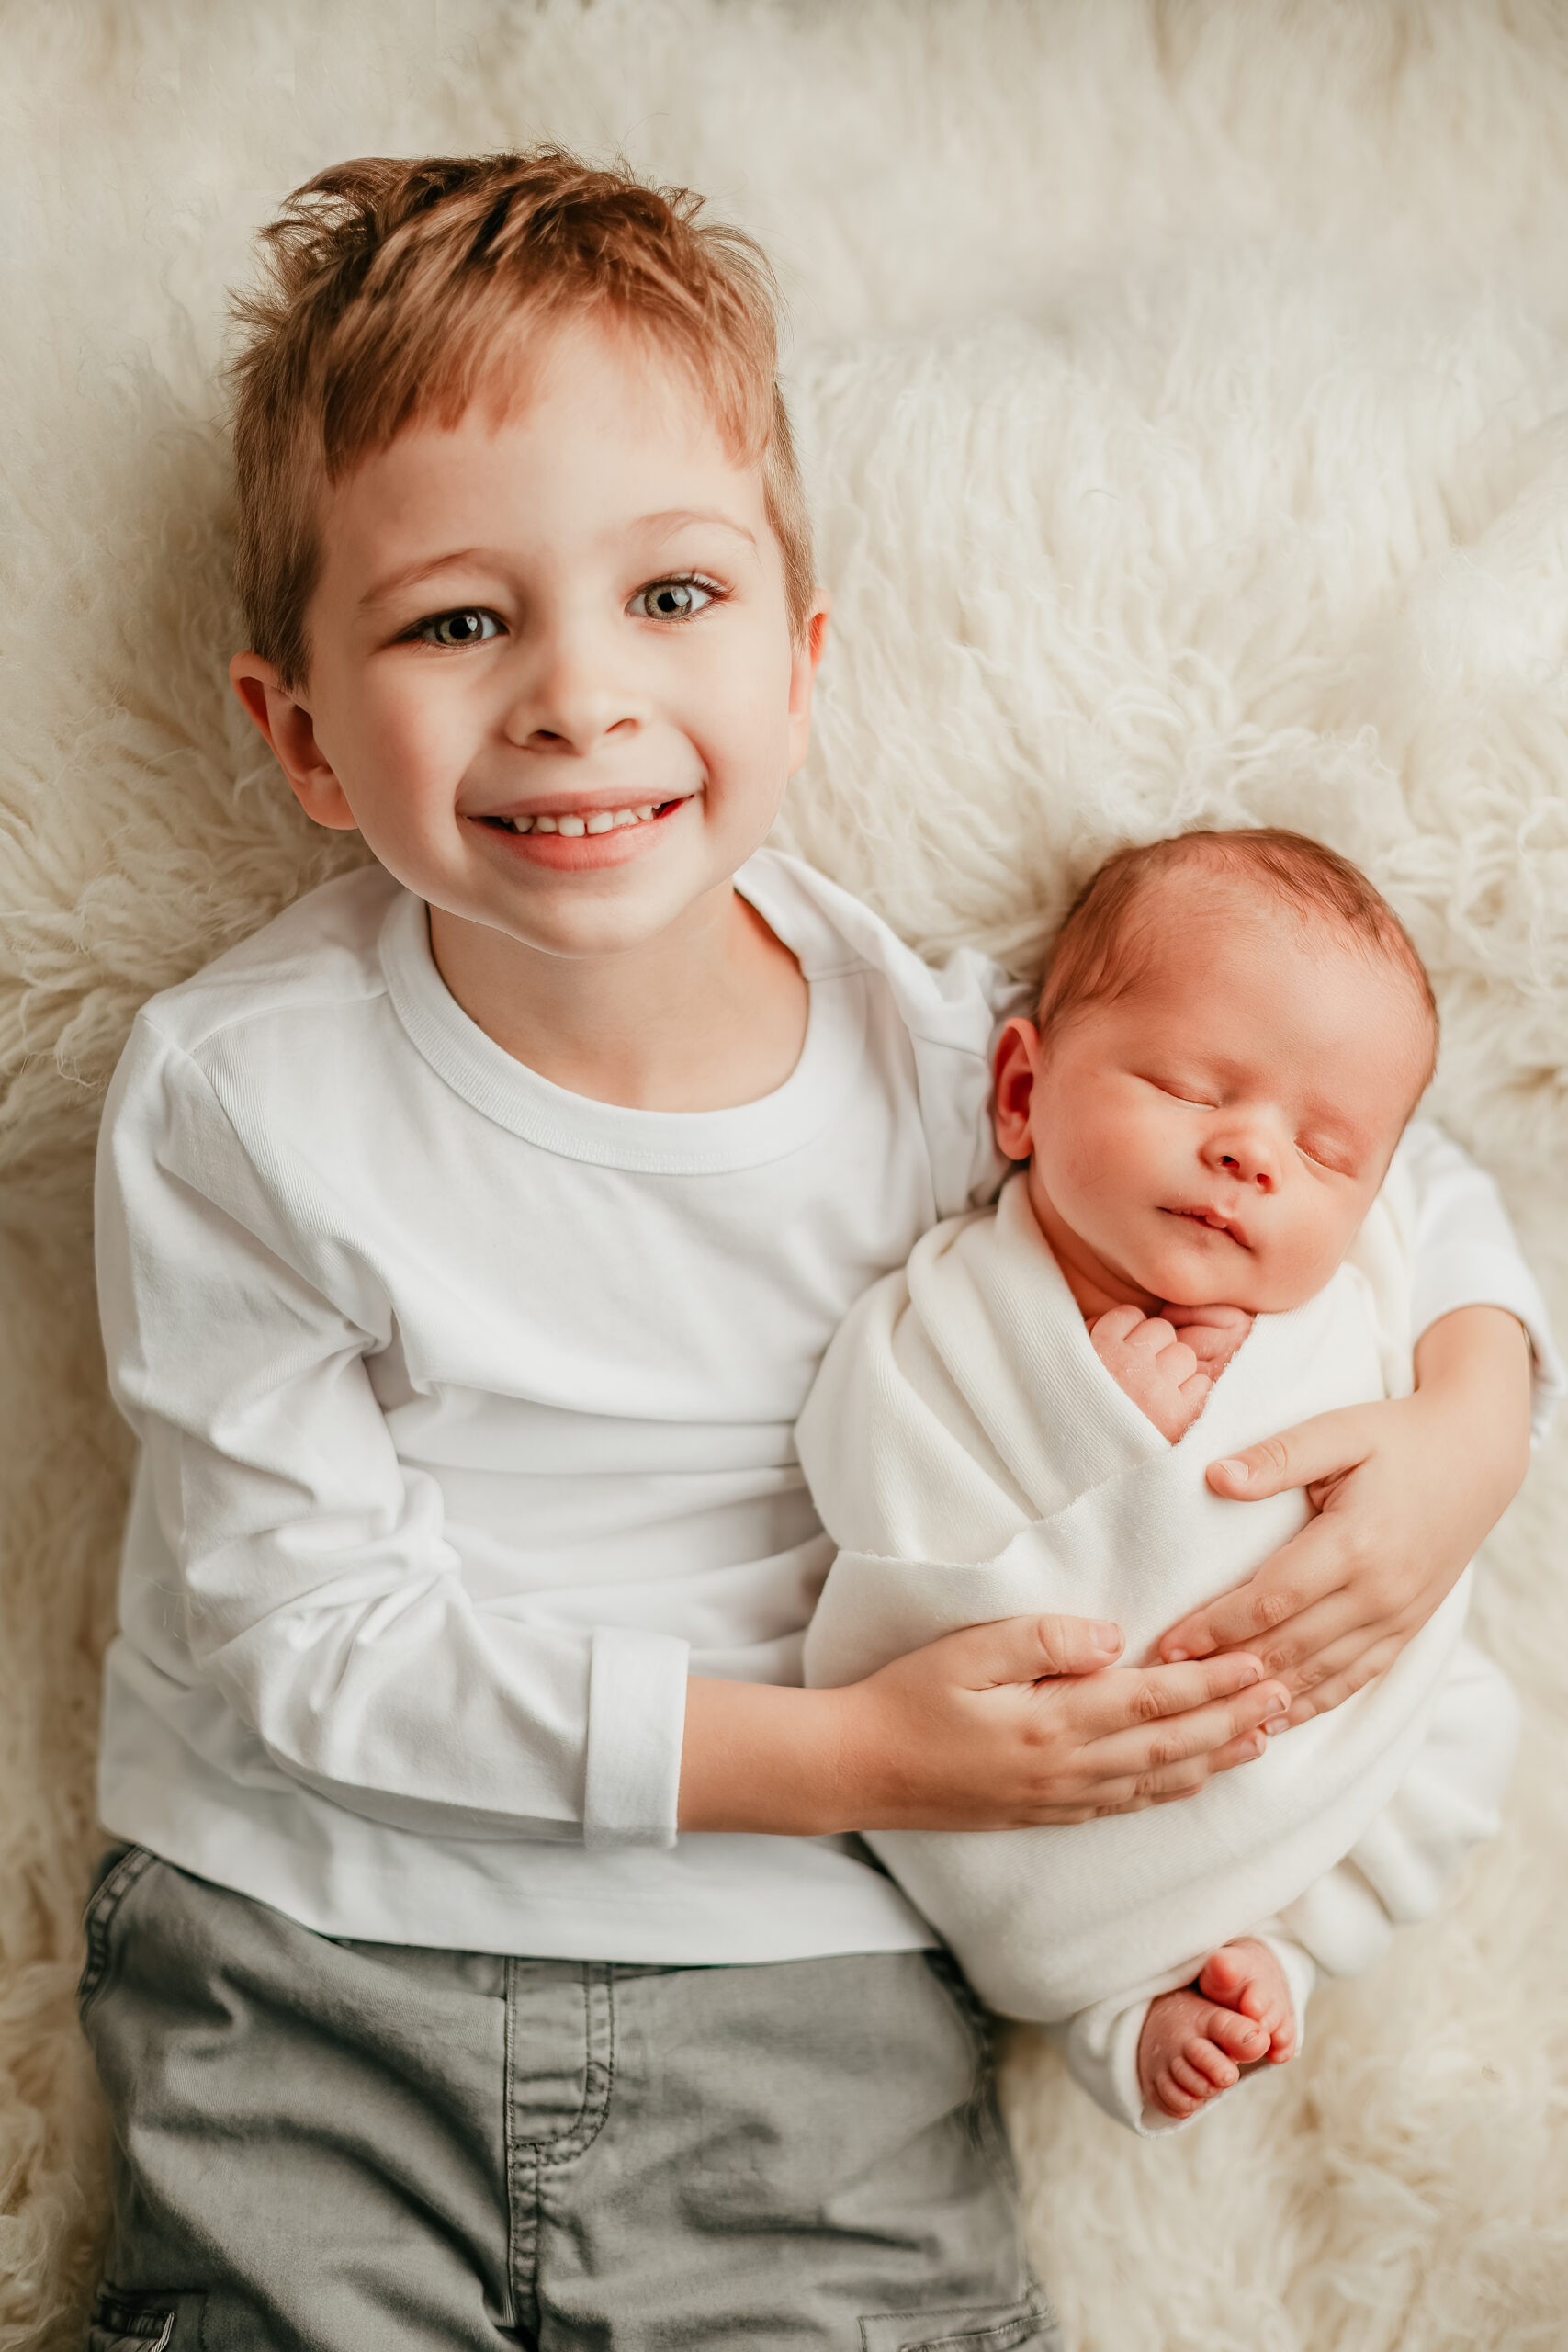 little boy hugging his newborn baby sibling nashville midwives